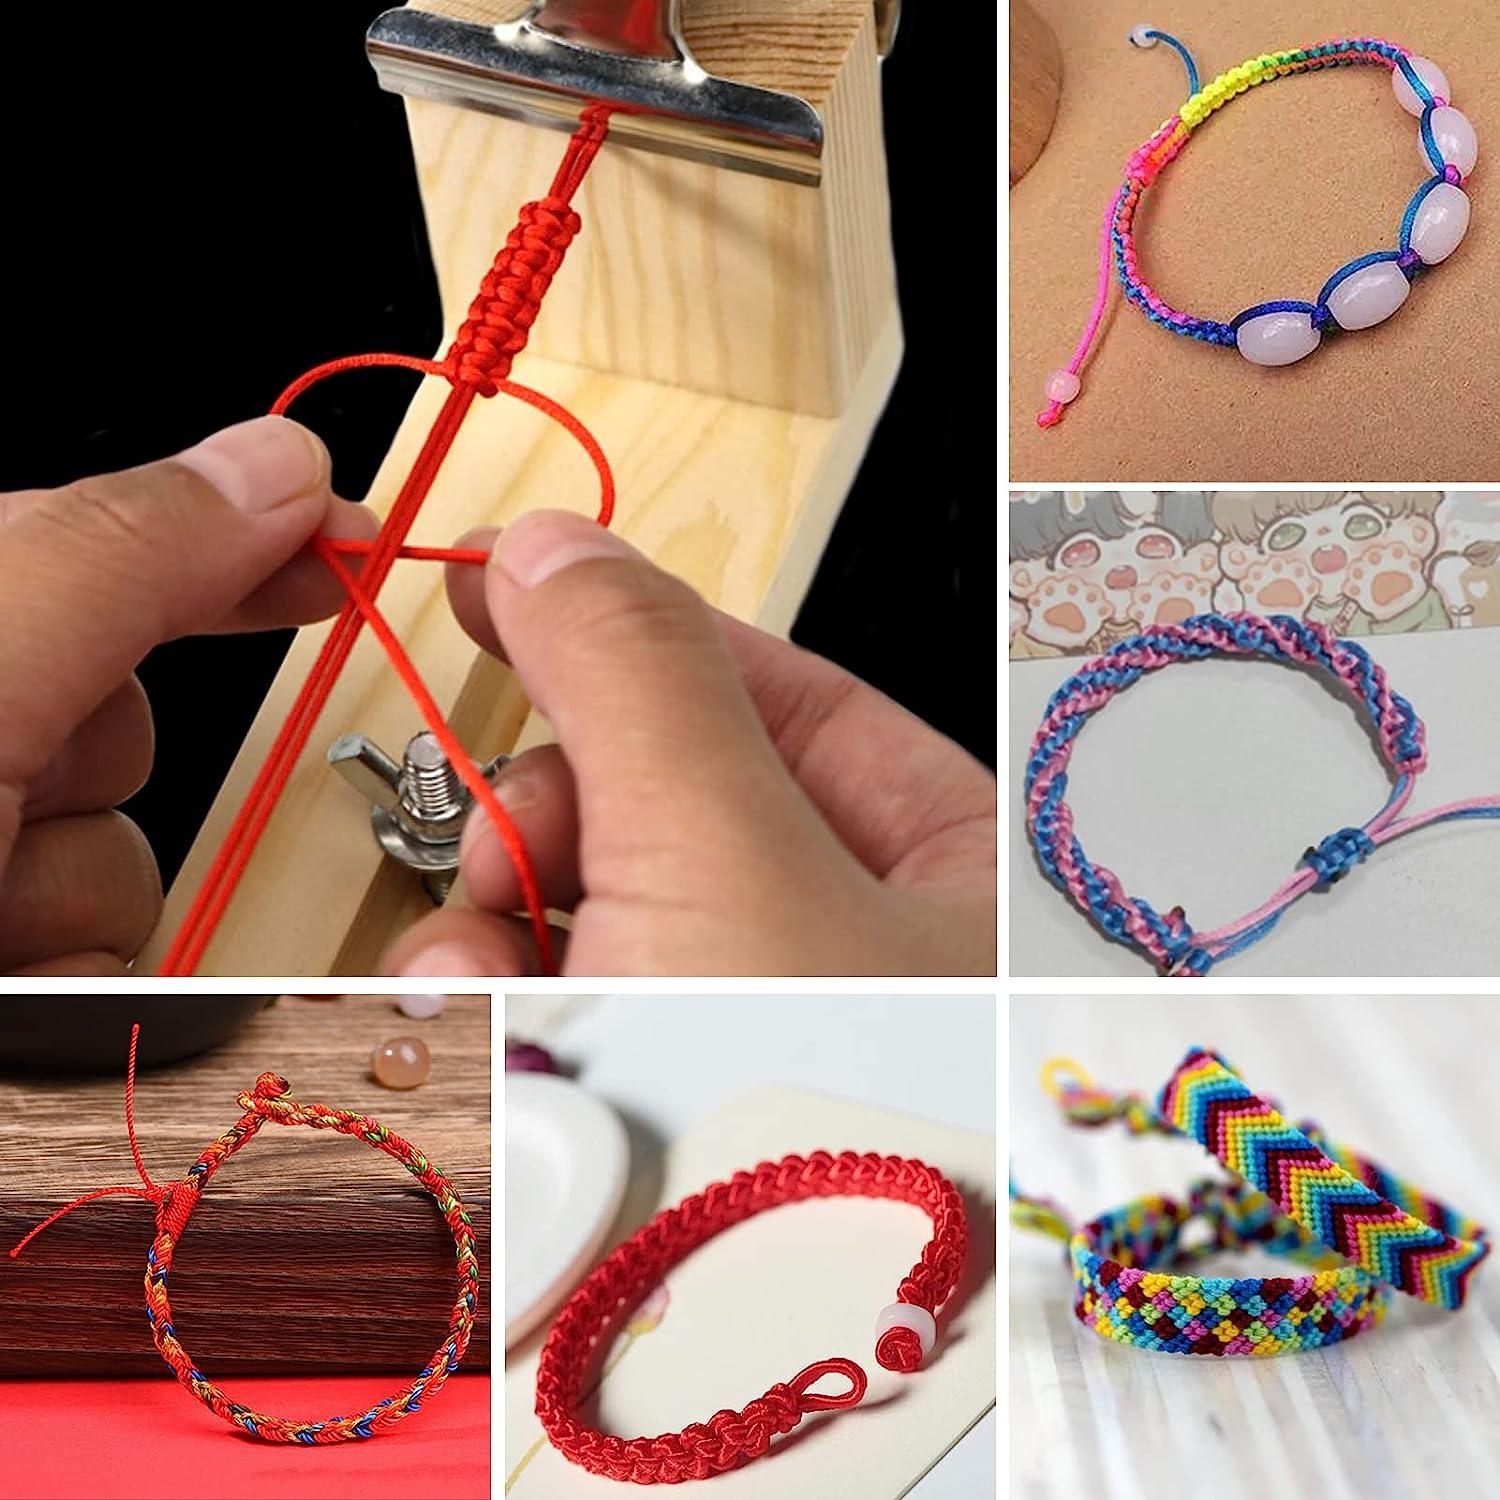 Cyrank Wooden Jig Bracelet Maker Adjustable Paracord Jig Bracelet Maker U  Shape Wooden Frame Bracelet Jig Kit DIY Wristband Rope Knot Braided Fixing  Tools